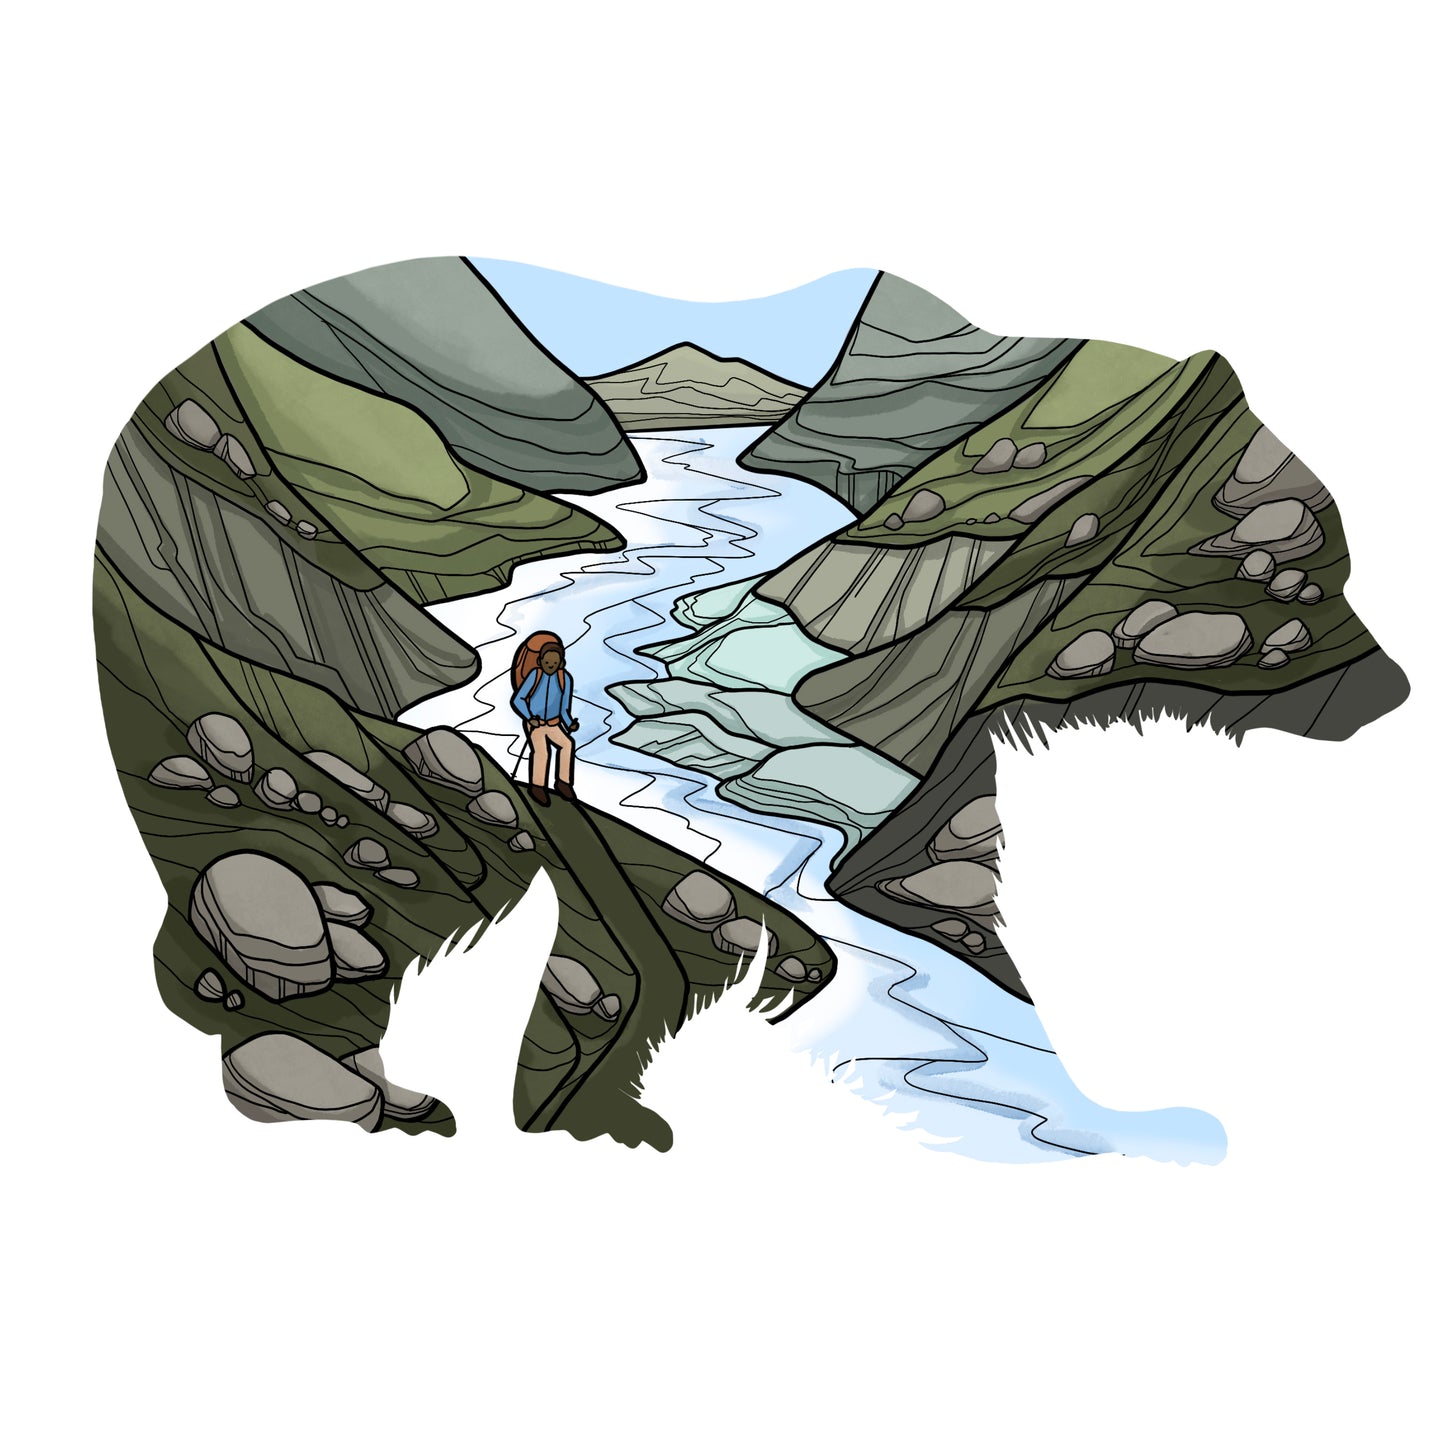 Grizzly Bear Backpacker art print